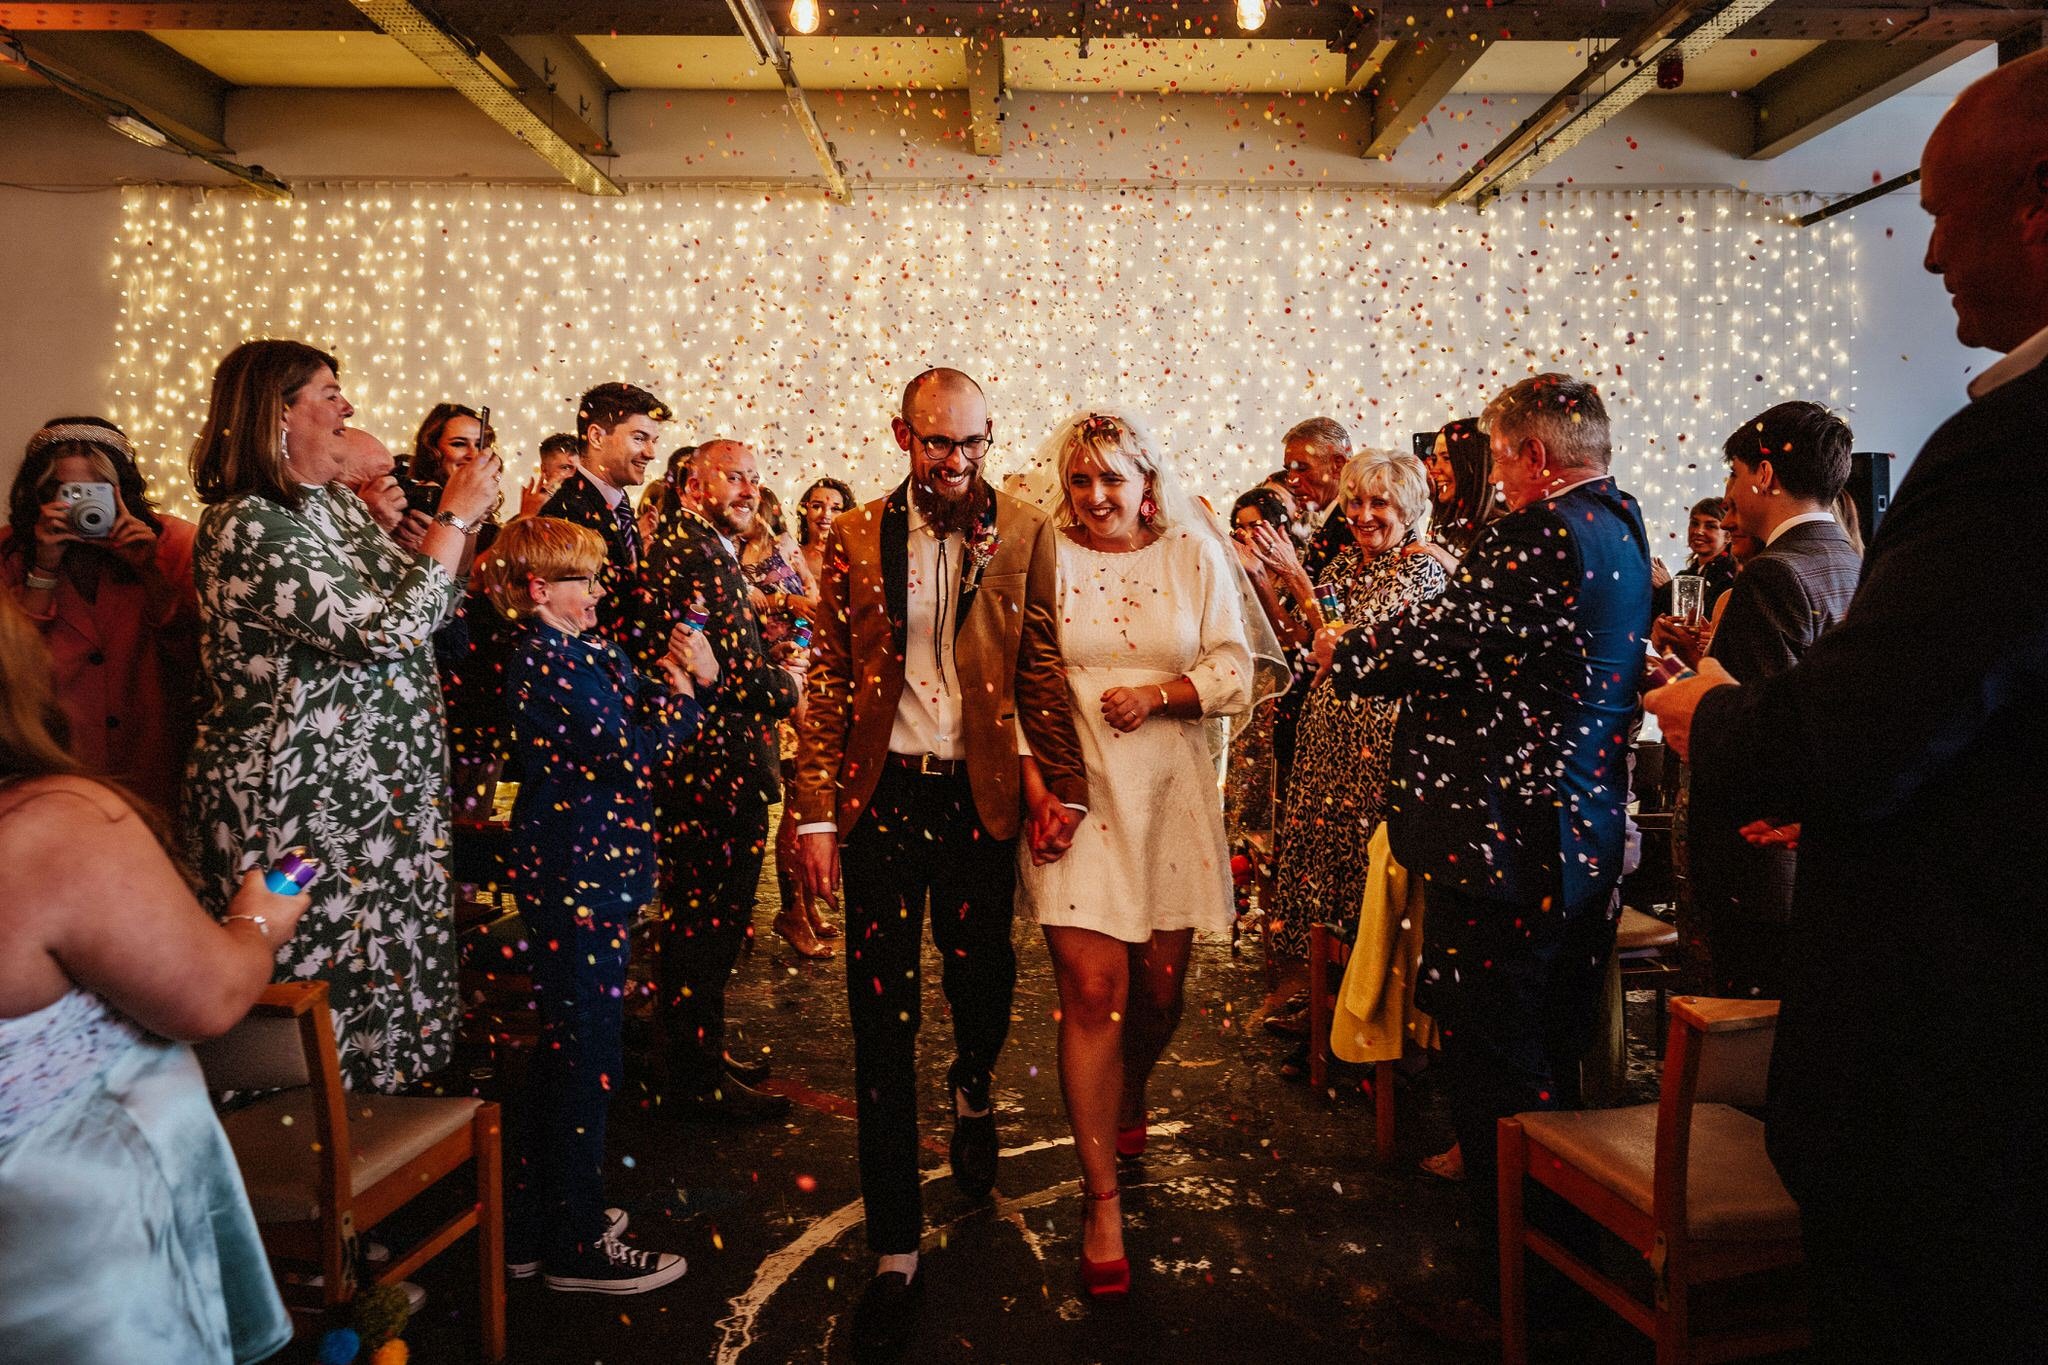 Alternative Sheffield Industrial Wedding at Trafalgar Warehouse